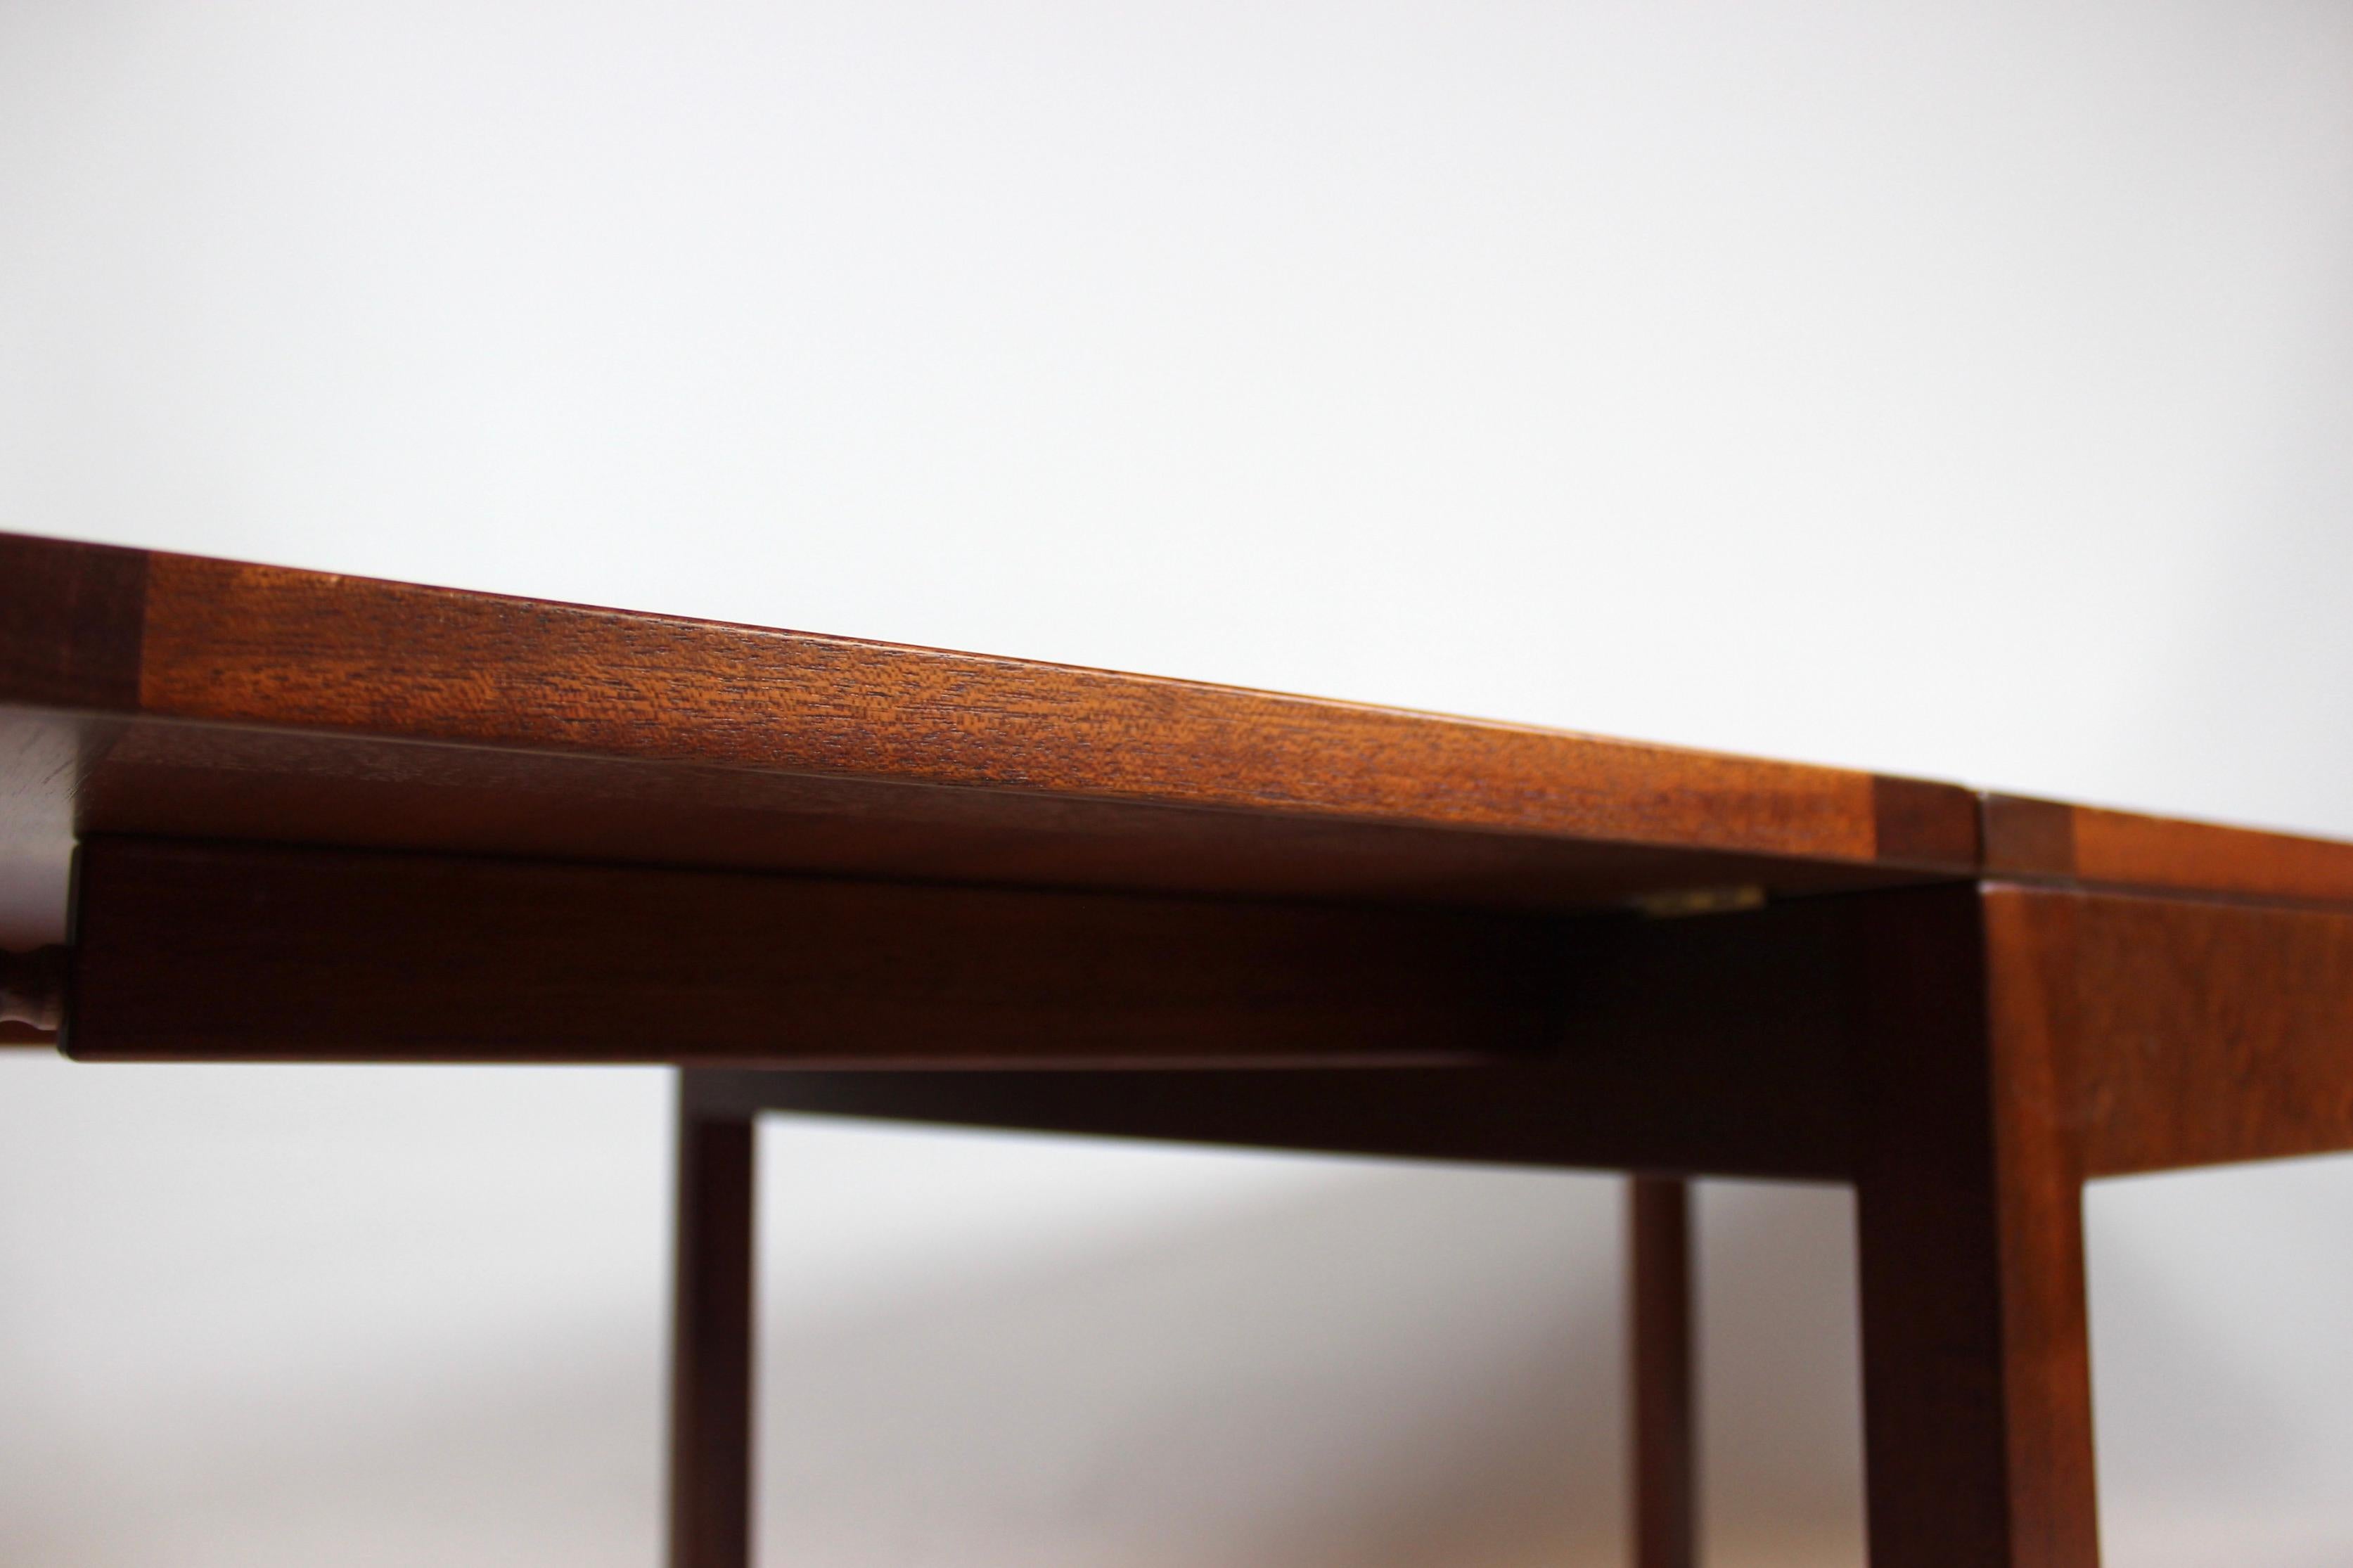 Scandinavian Modern Folding Table in Cherry of Danish Design from the 1960s